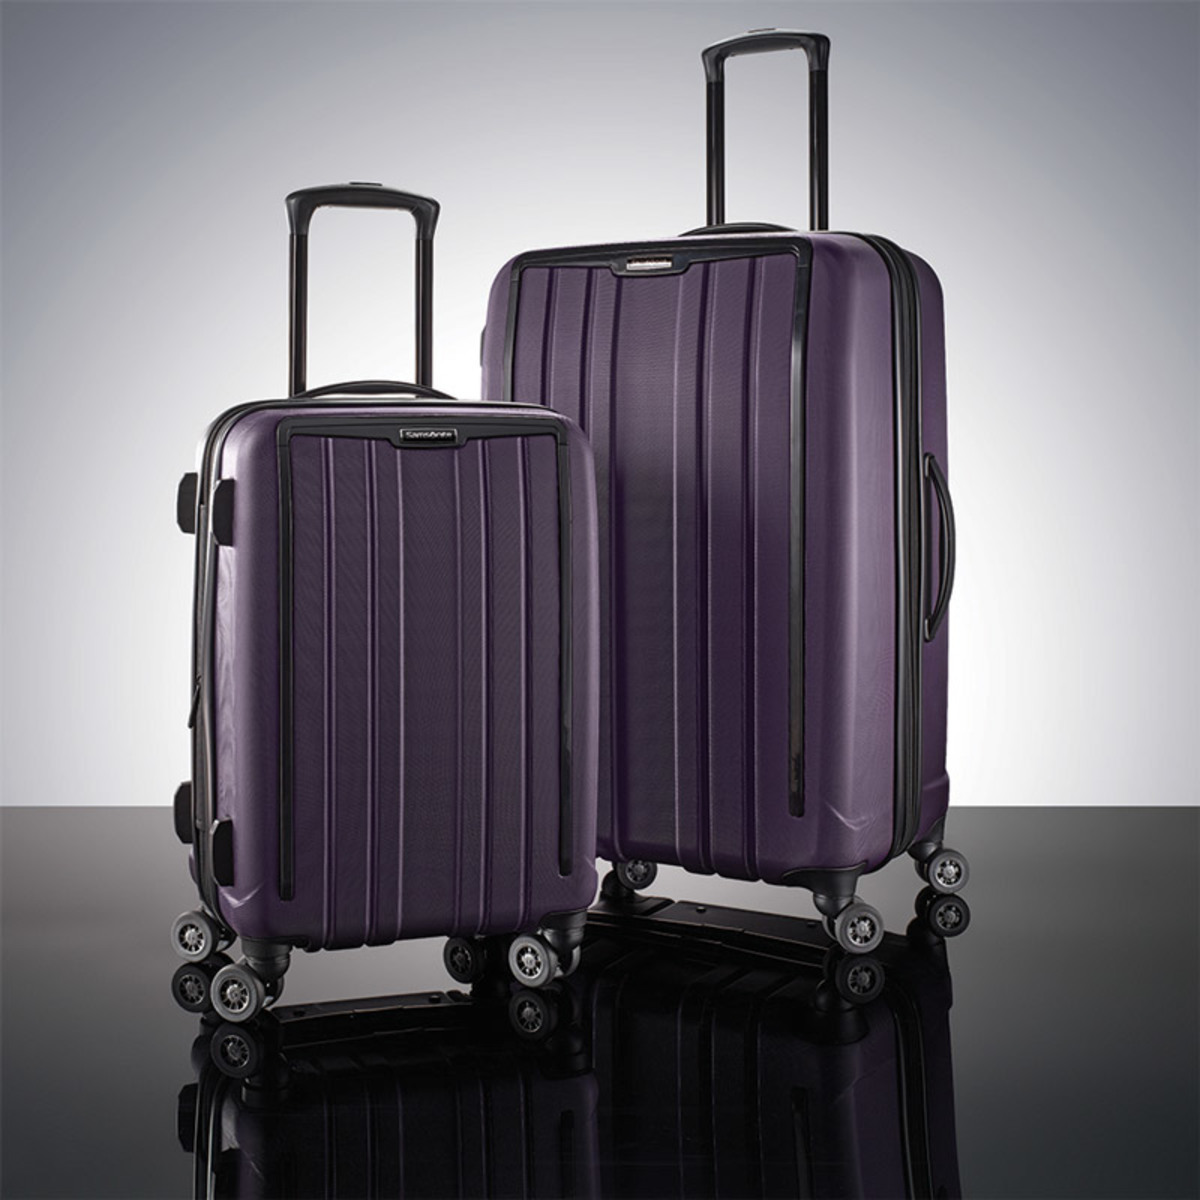 samsonite travel luggage set